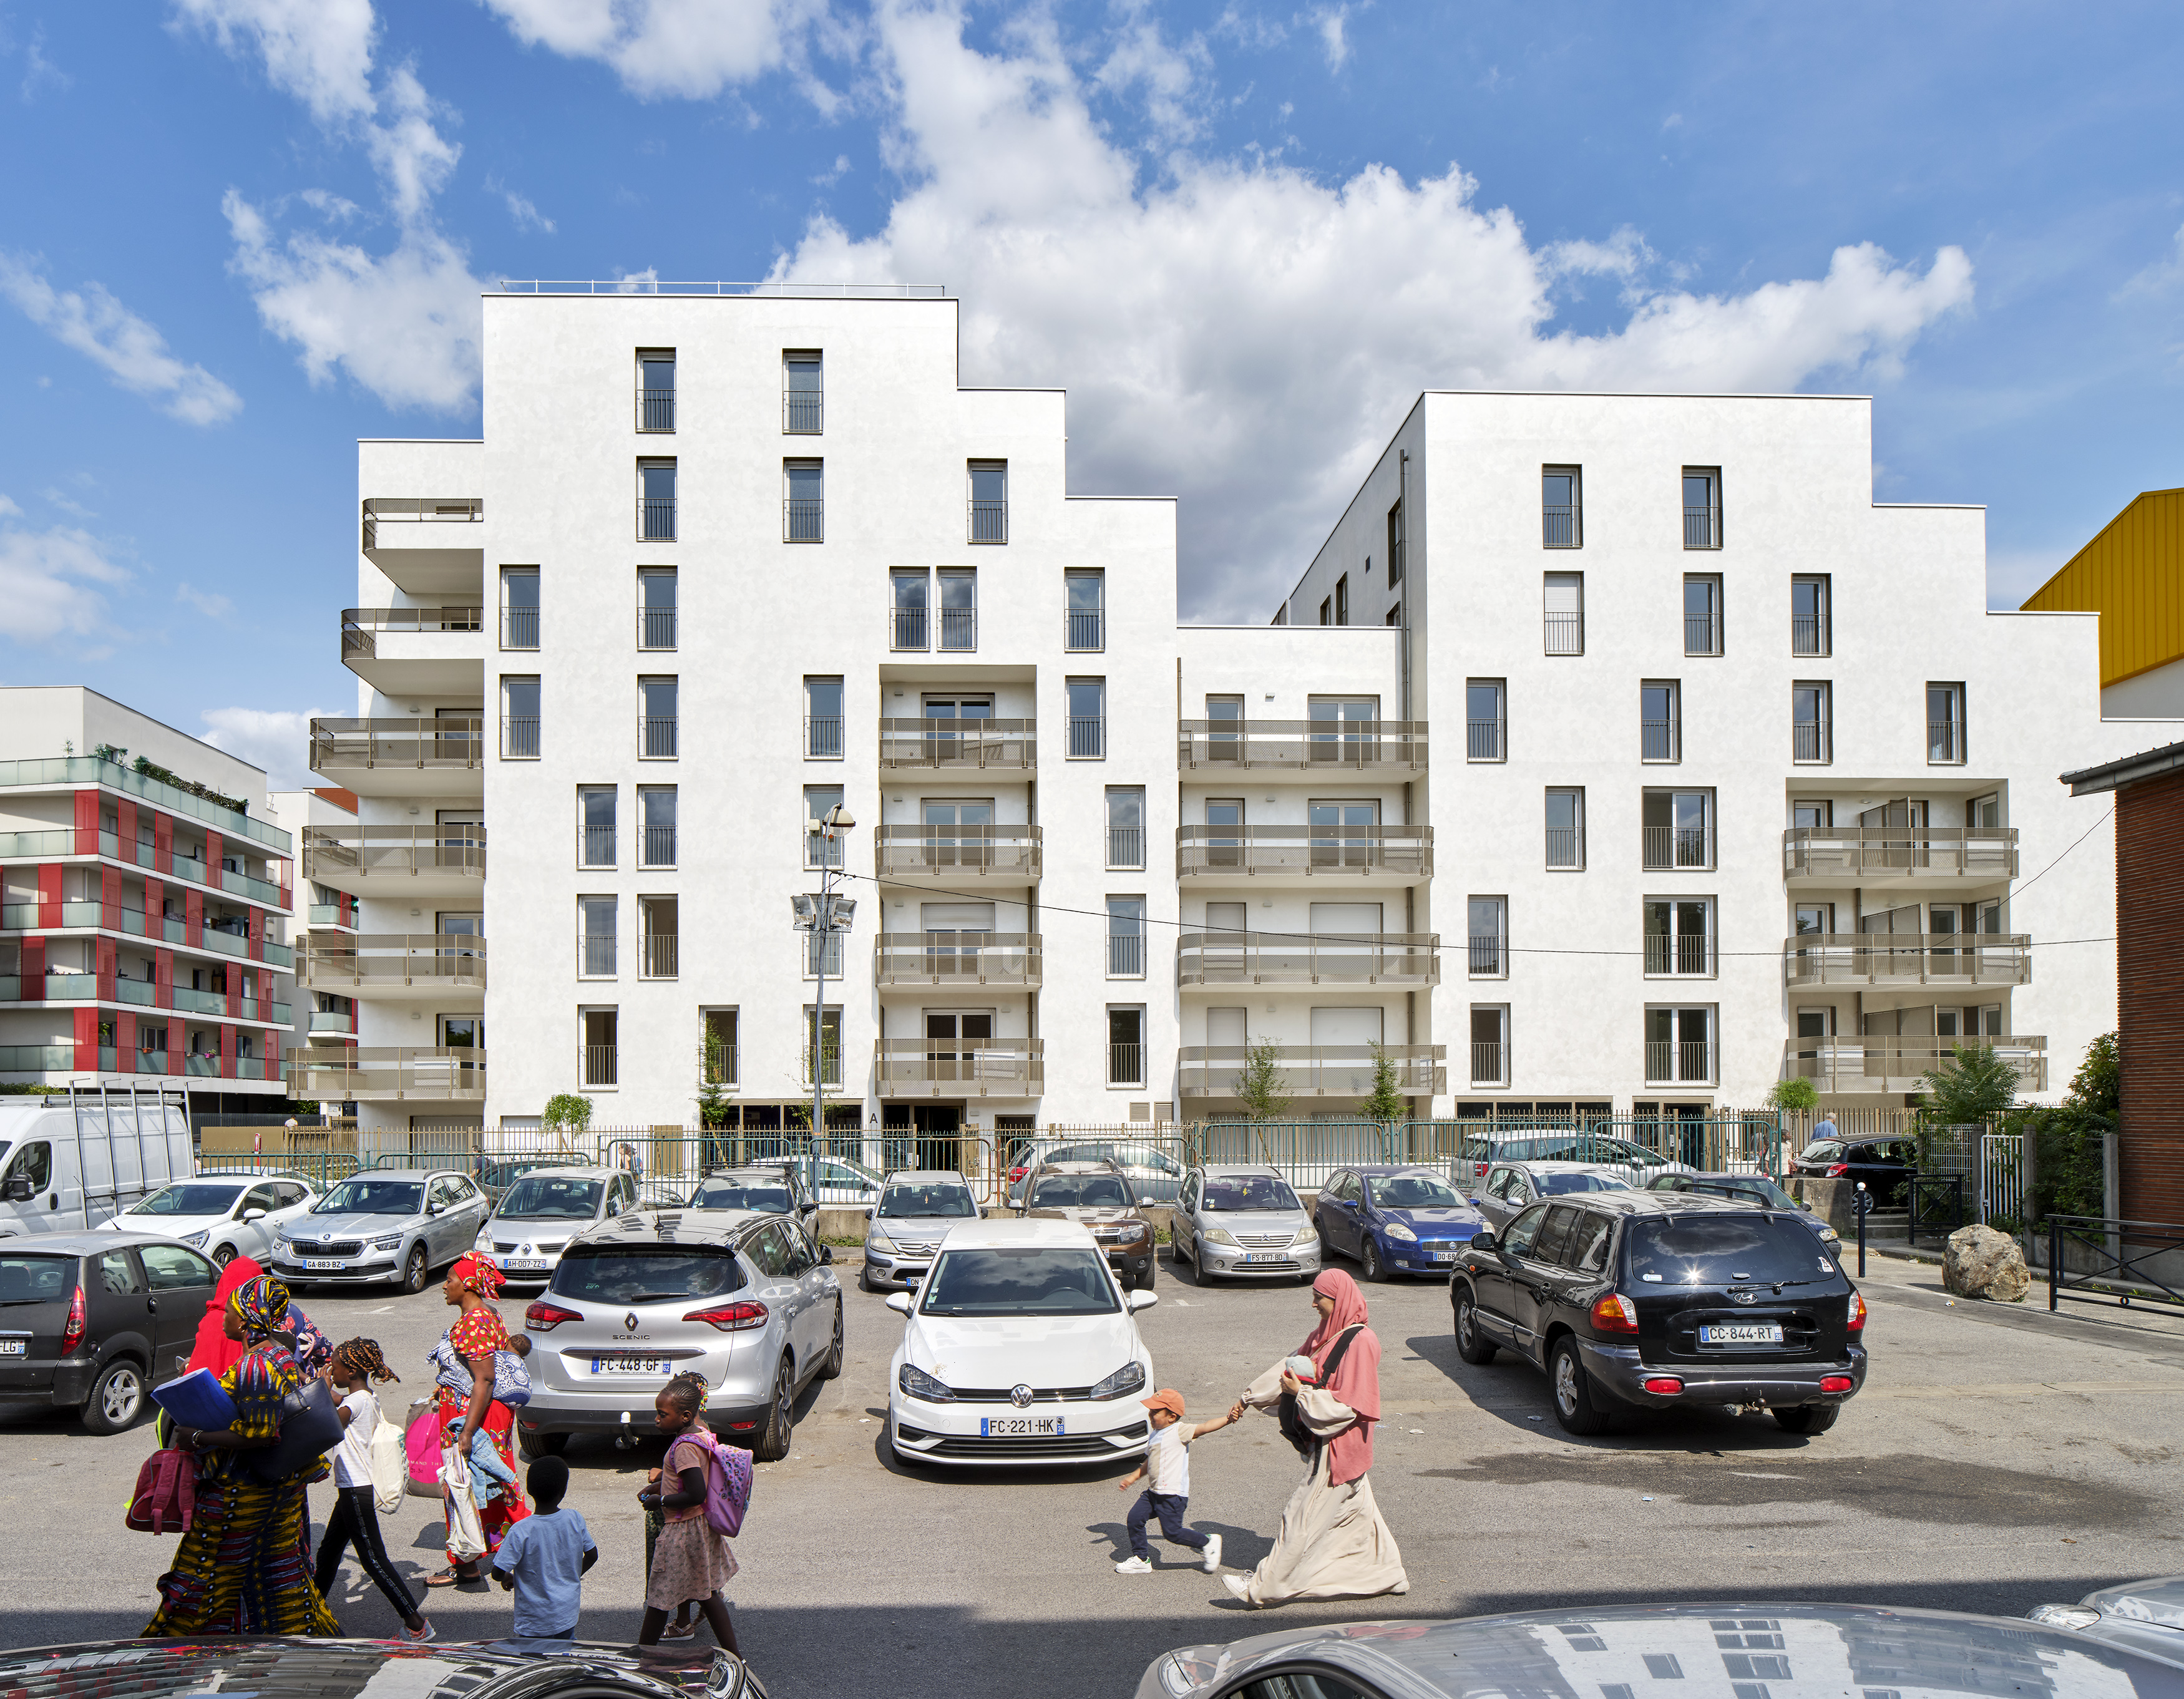 45 housing units in Champigny-sur-Marne Bruno Rollet Architecte